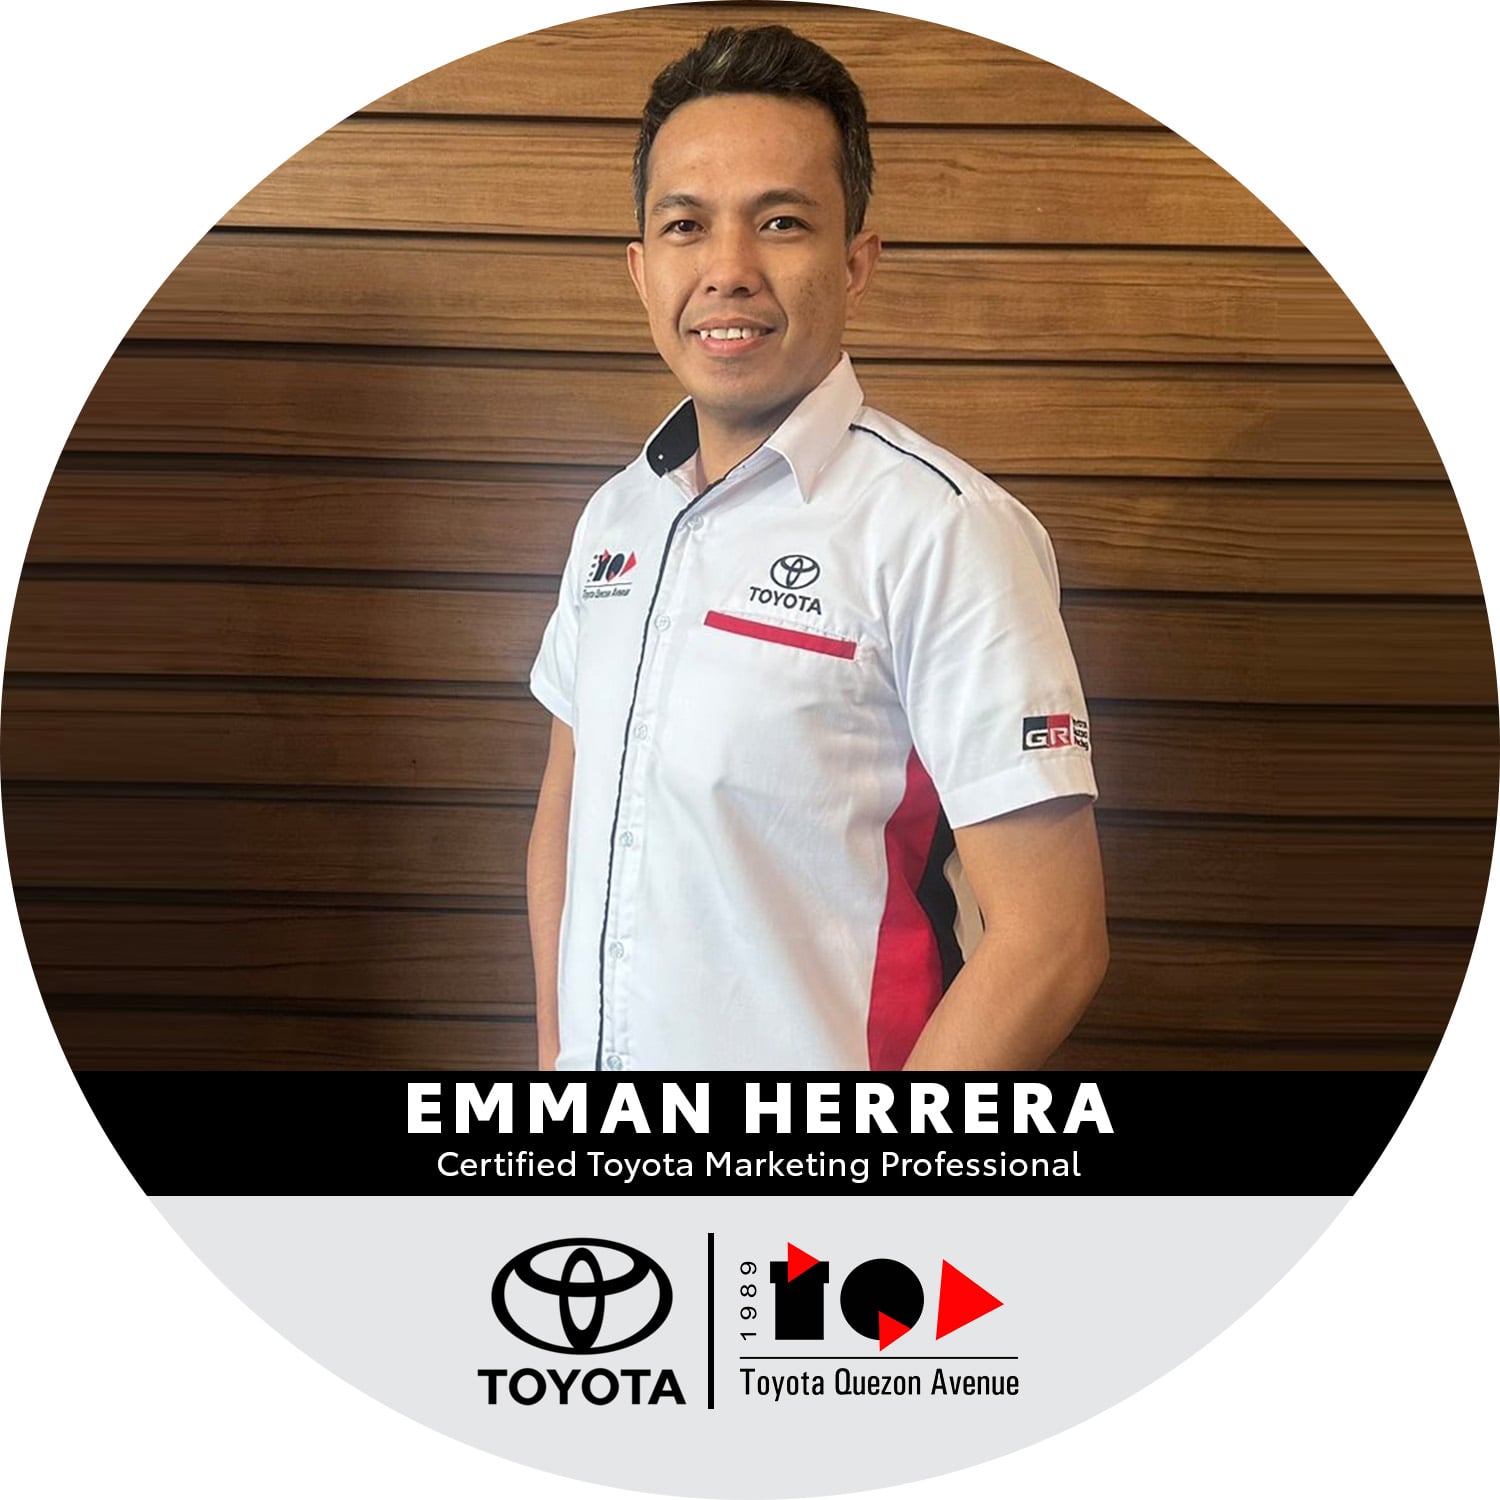 Certified Toyota Marketing Professionals - Emman Herrera